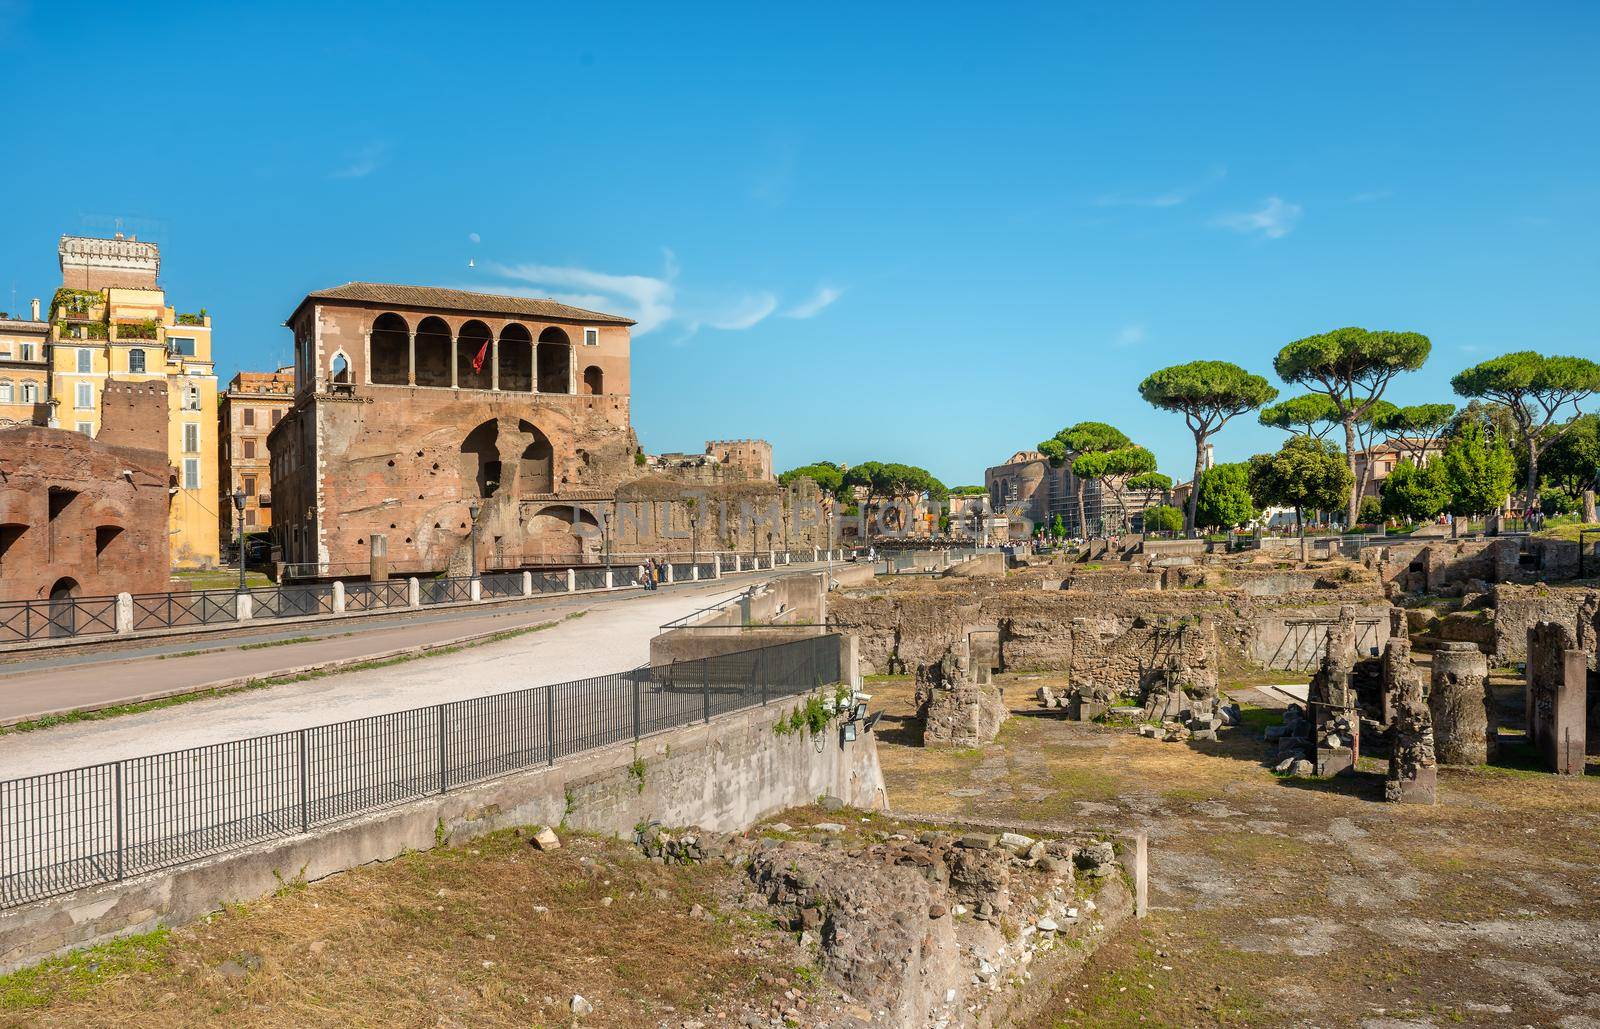 Ruins of Roman Forum in summer, Italy